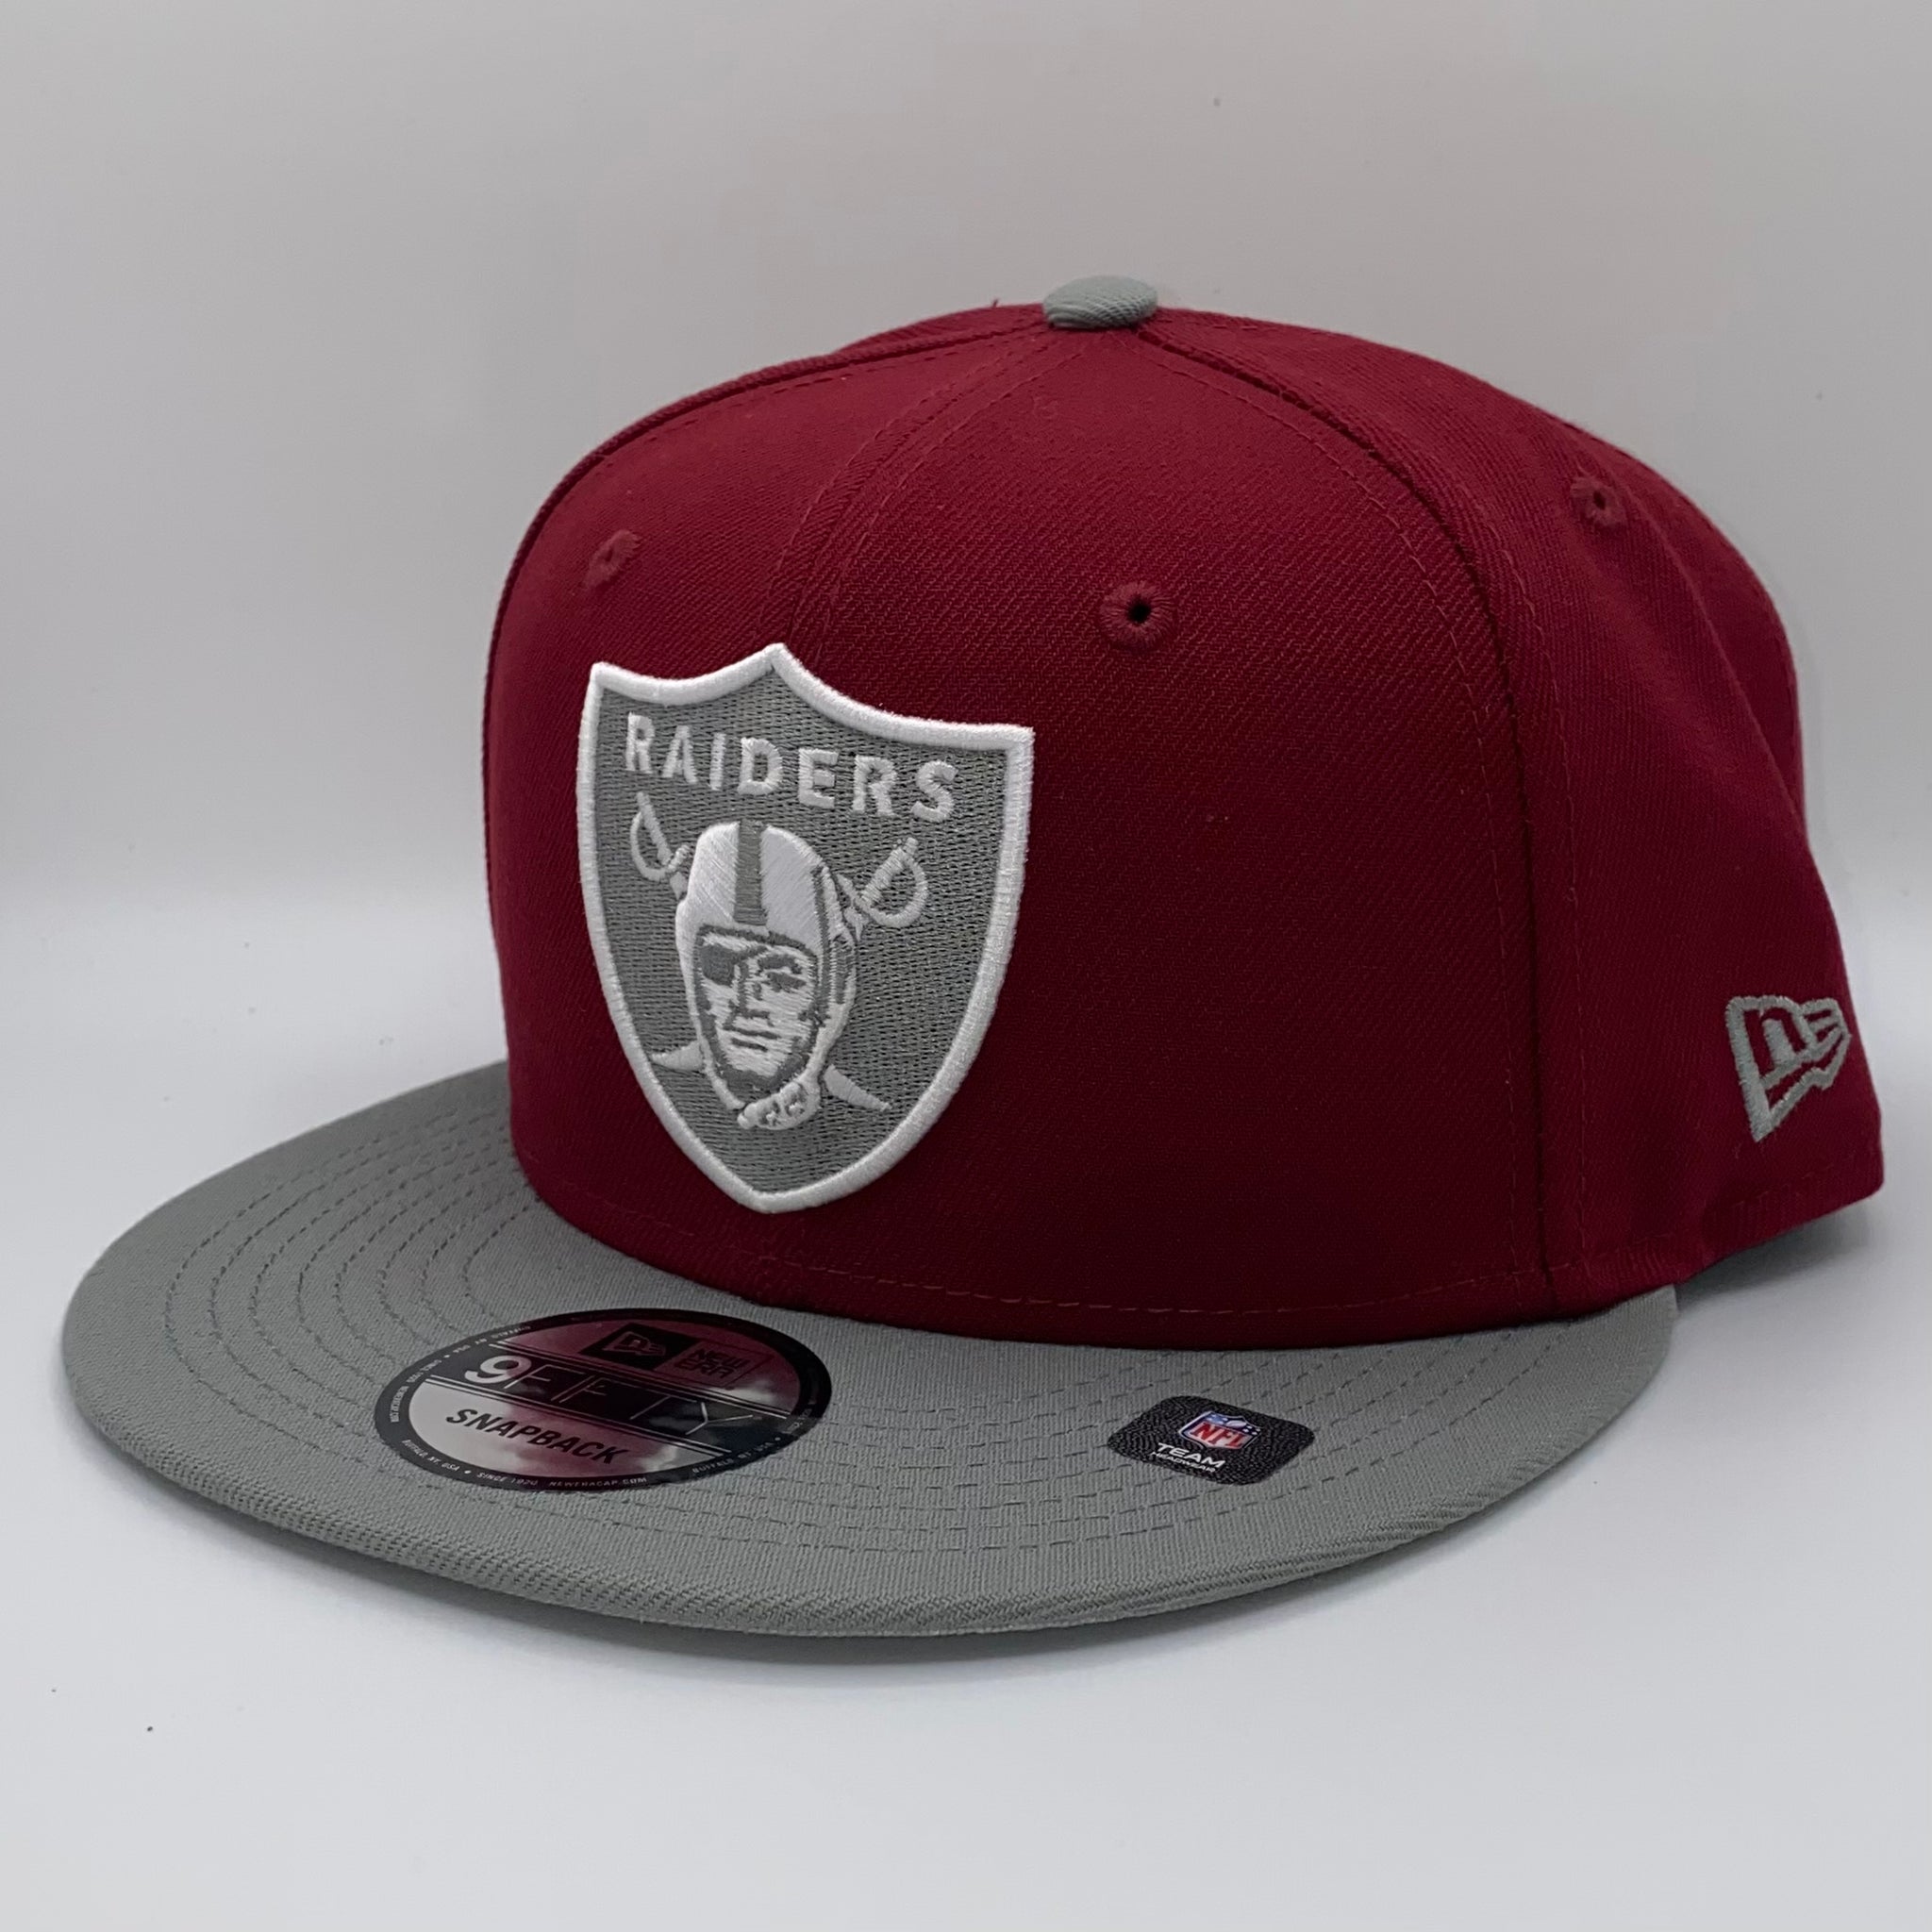 Las Vegas Raiders New Era 2Tone Color Pack 9FIFTY Snapback Hat - Cardinal/Gray